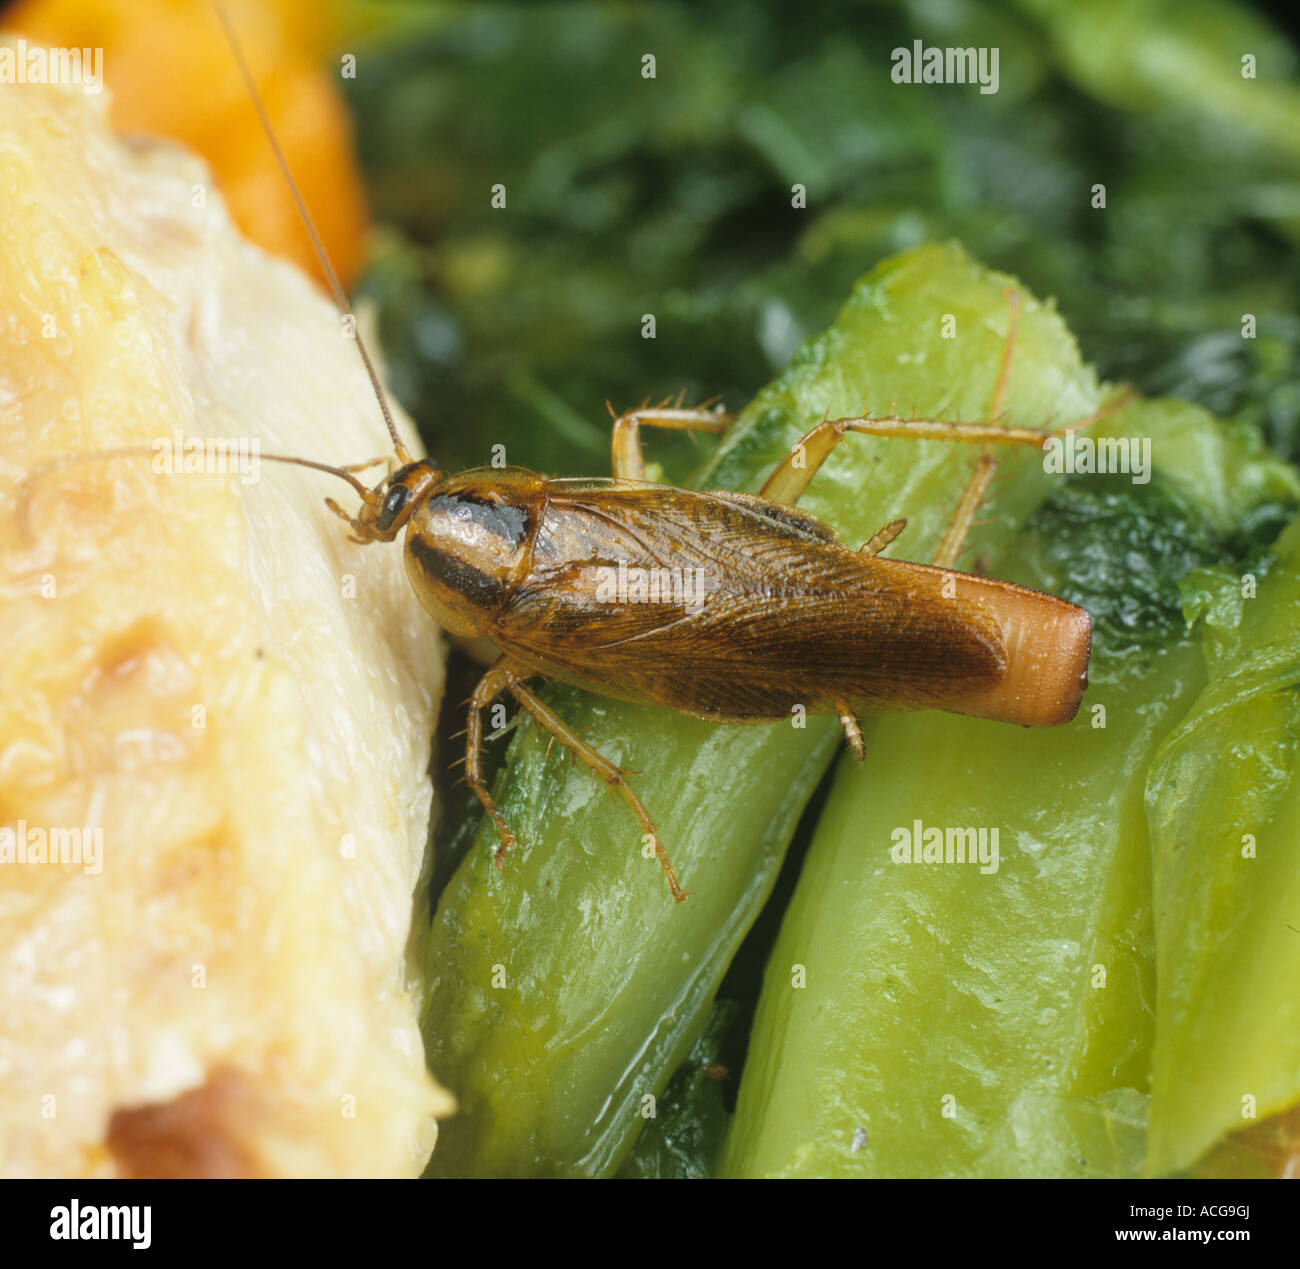 La cucaracha alemana Blattella germanica adulto gravid hembra en la comida Foto de stock